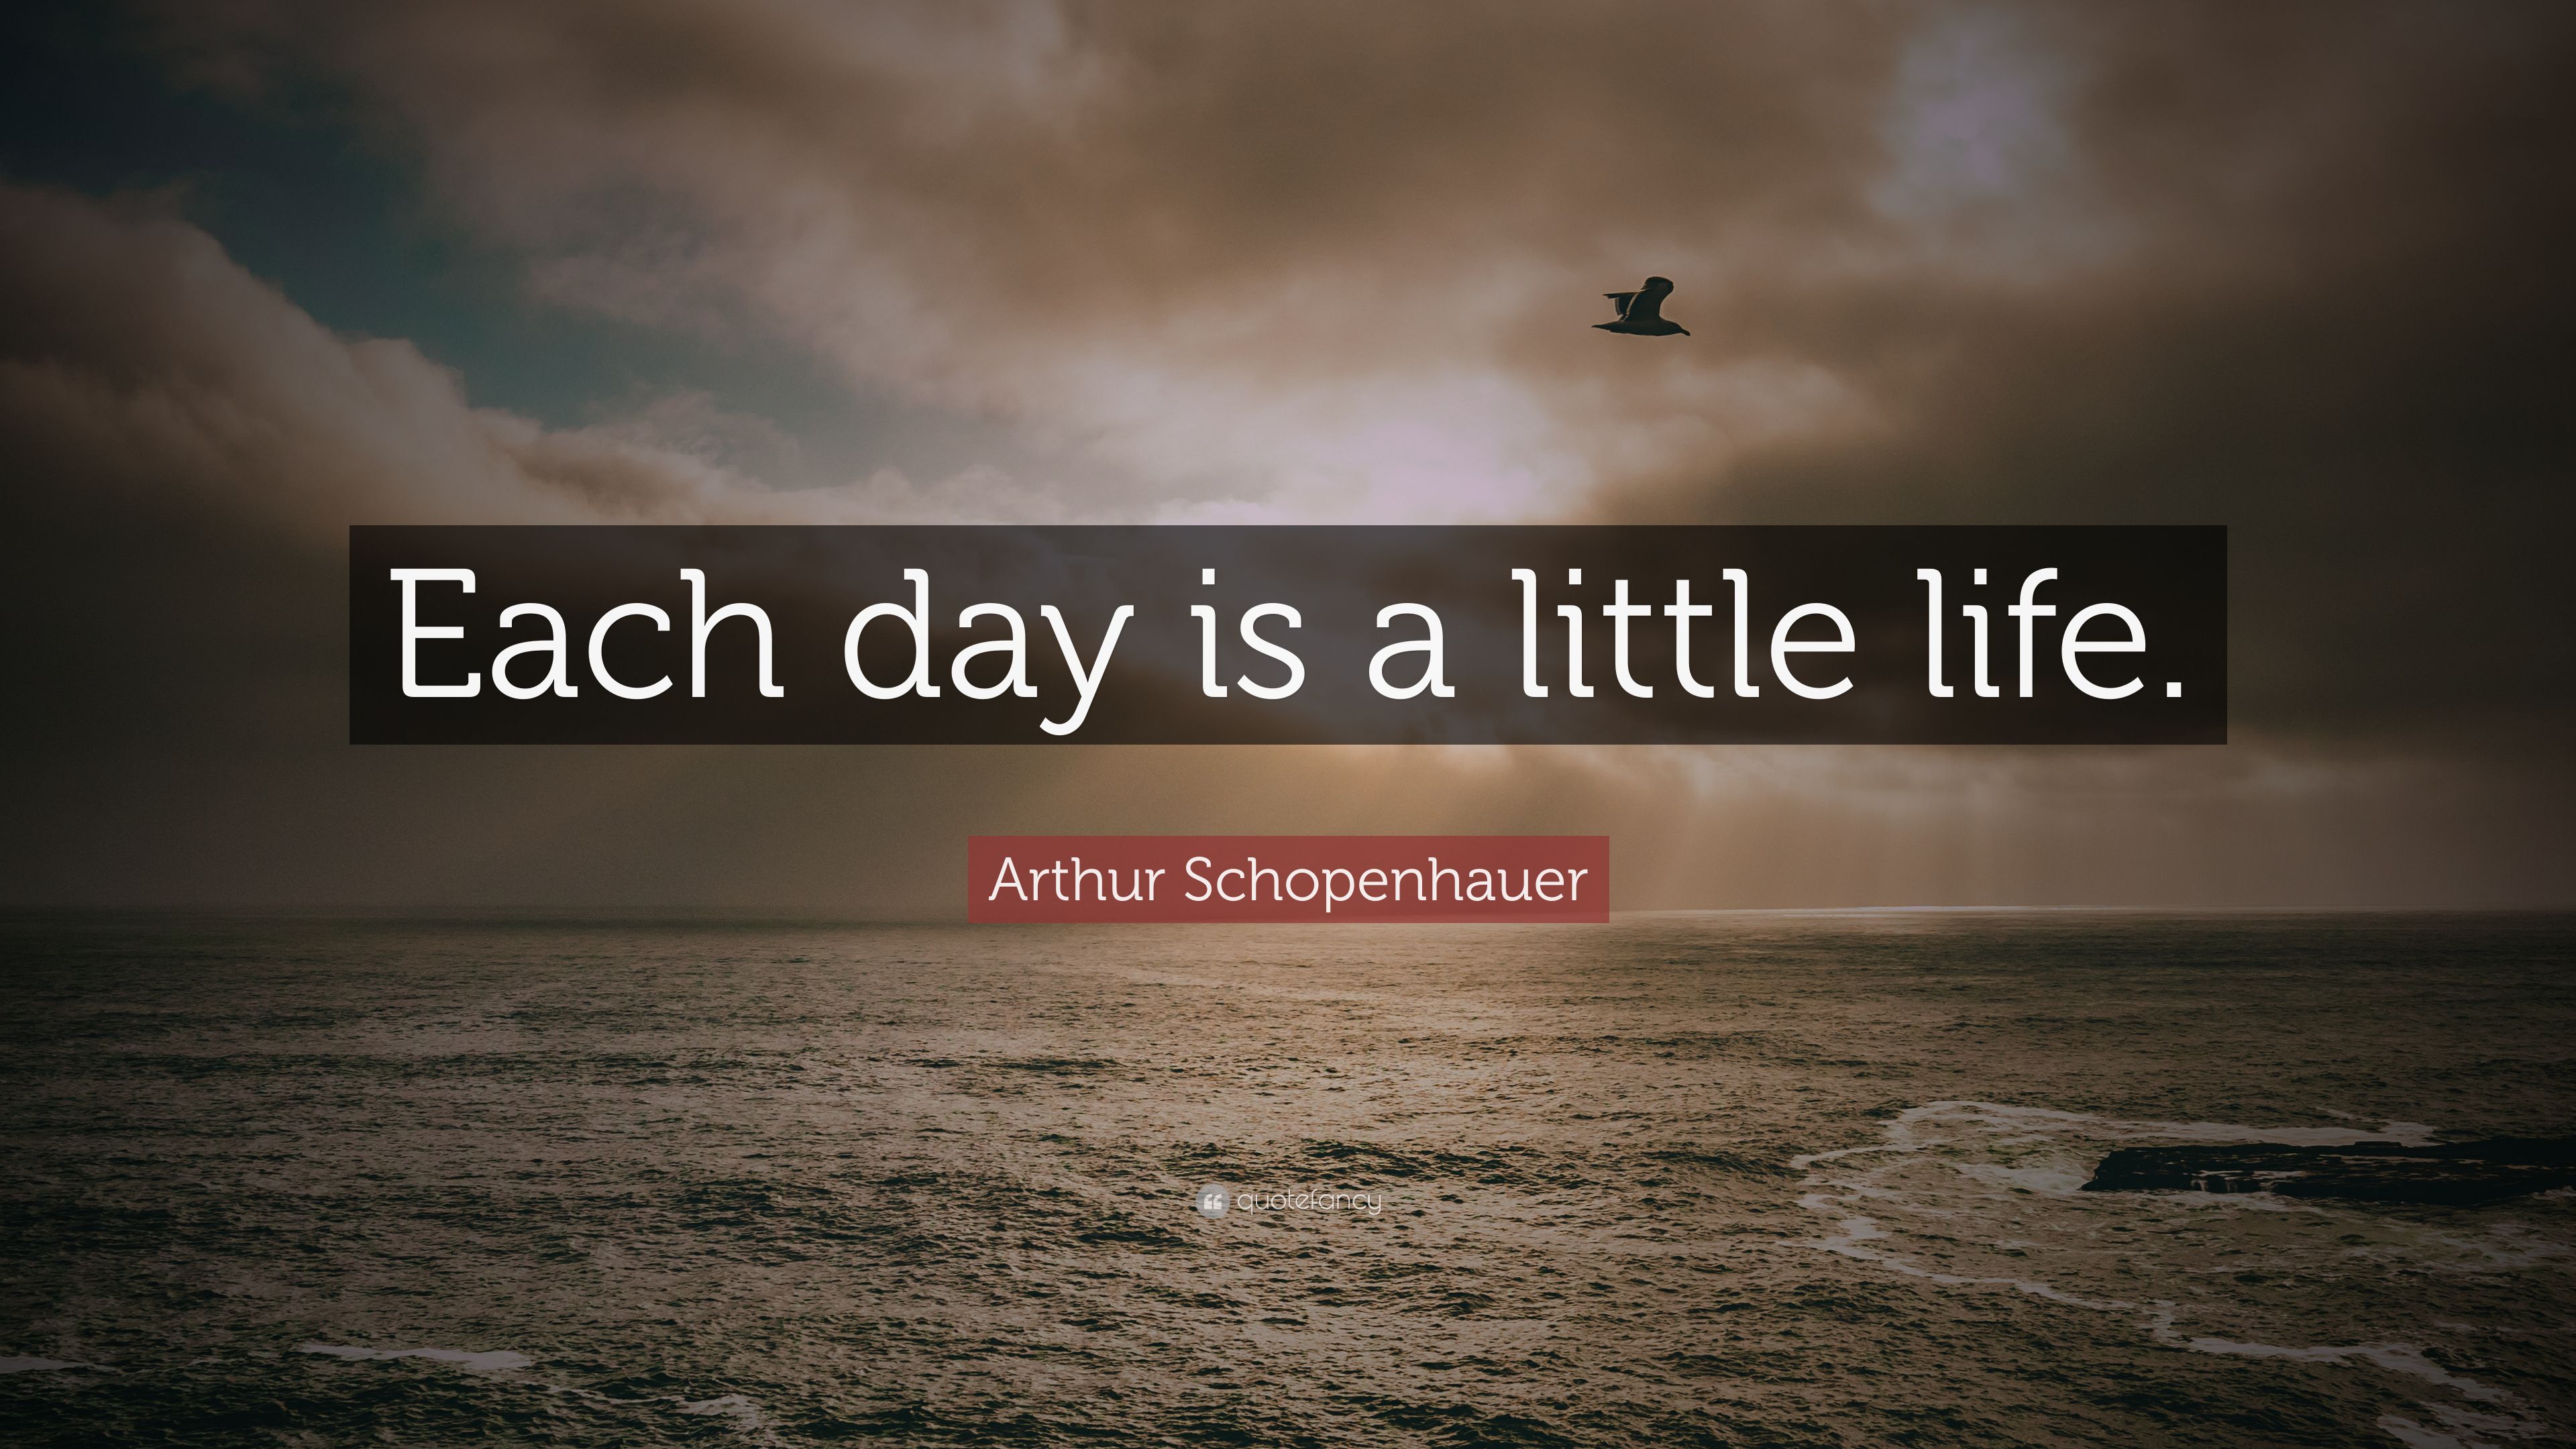 Arthur Schopenhauer Quotes (2021 Update)